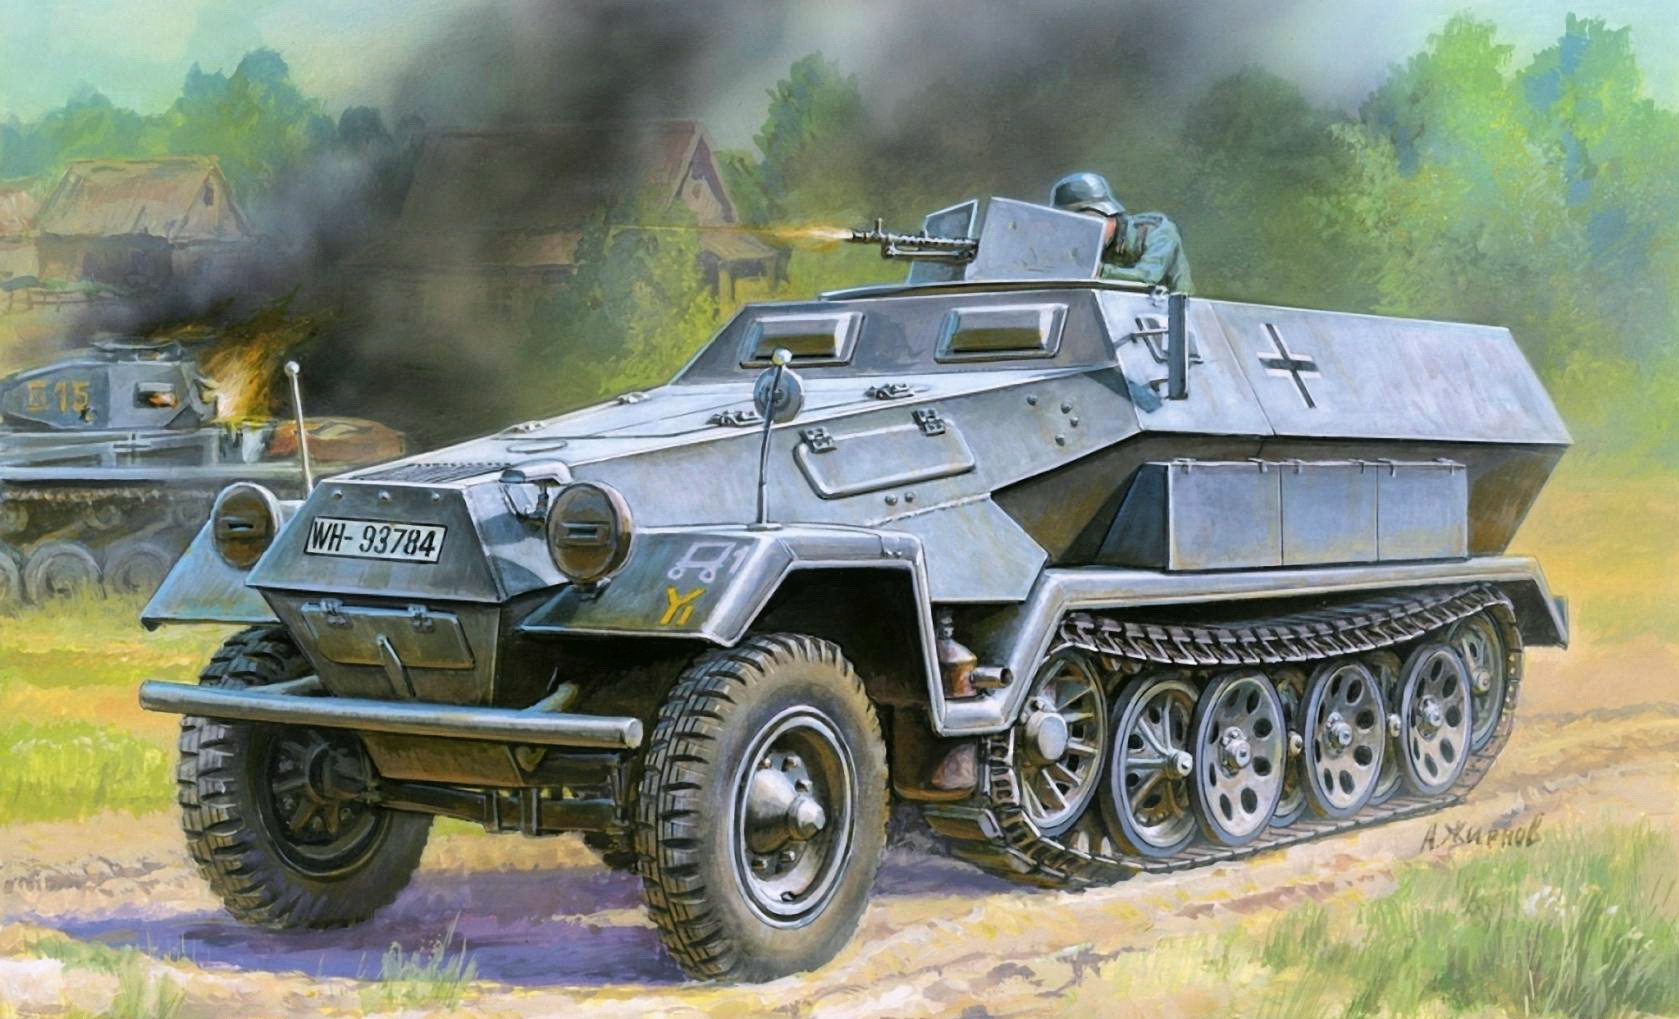 Half Truck, Half Tank, the German Sd.Kfz 251 Was Wholly Successful